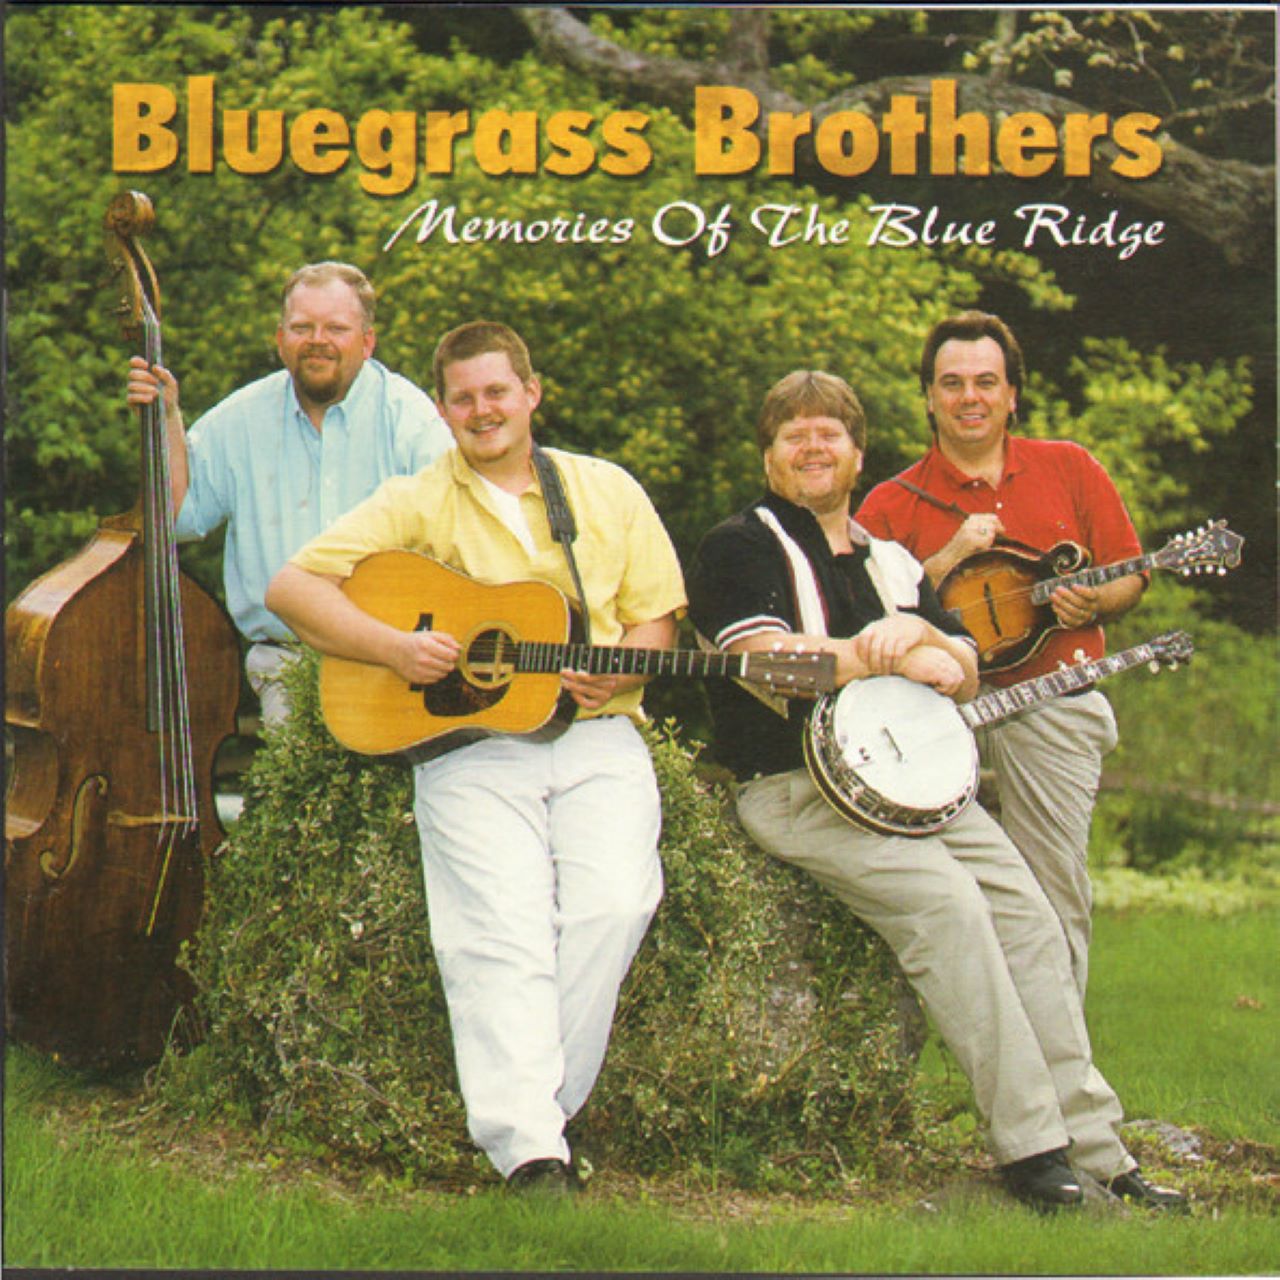 Bluegrass Brothers - Memories Of The Blue Ridge cover album